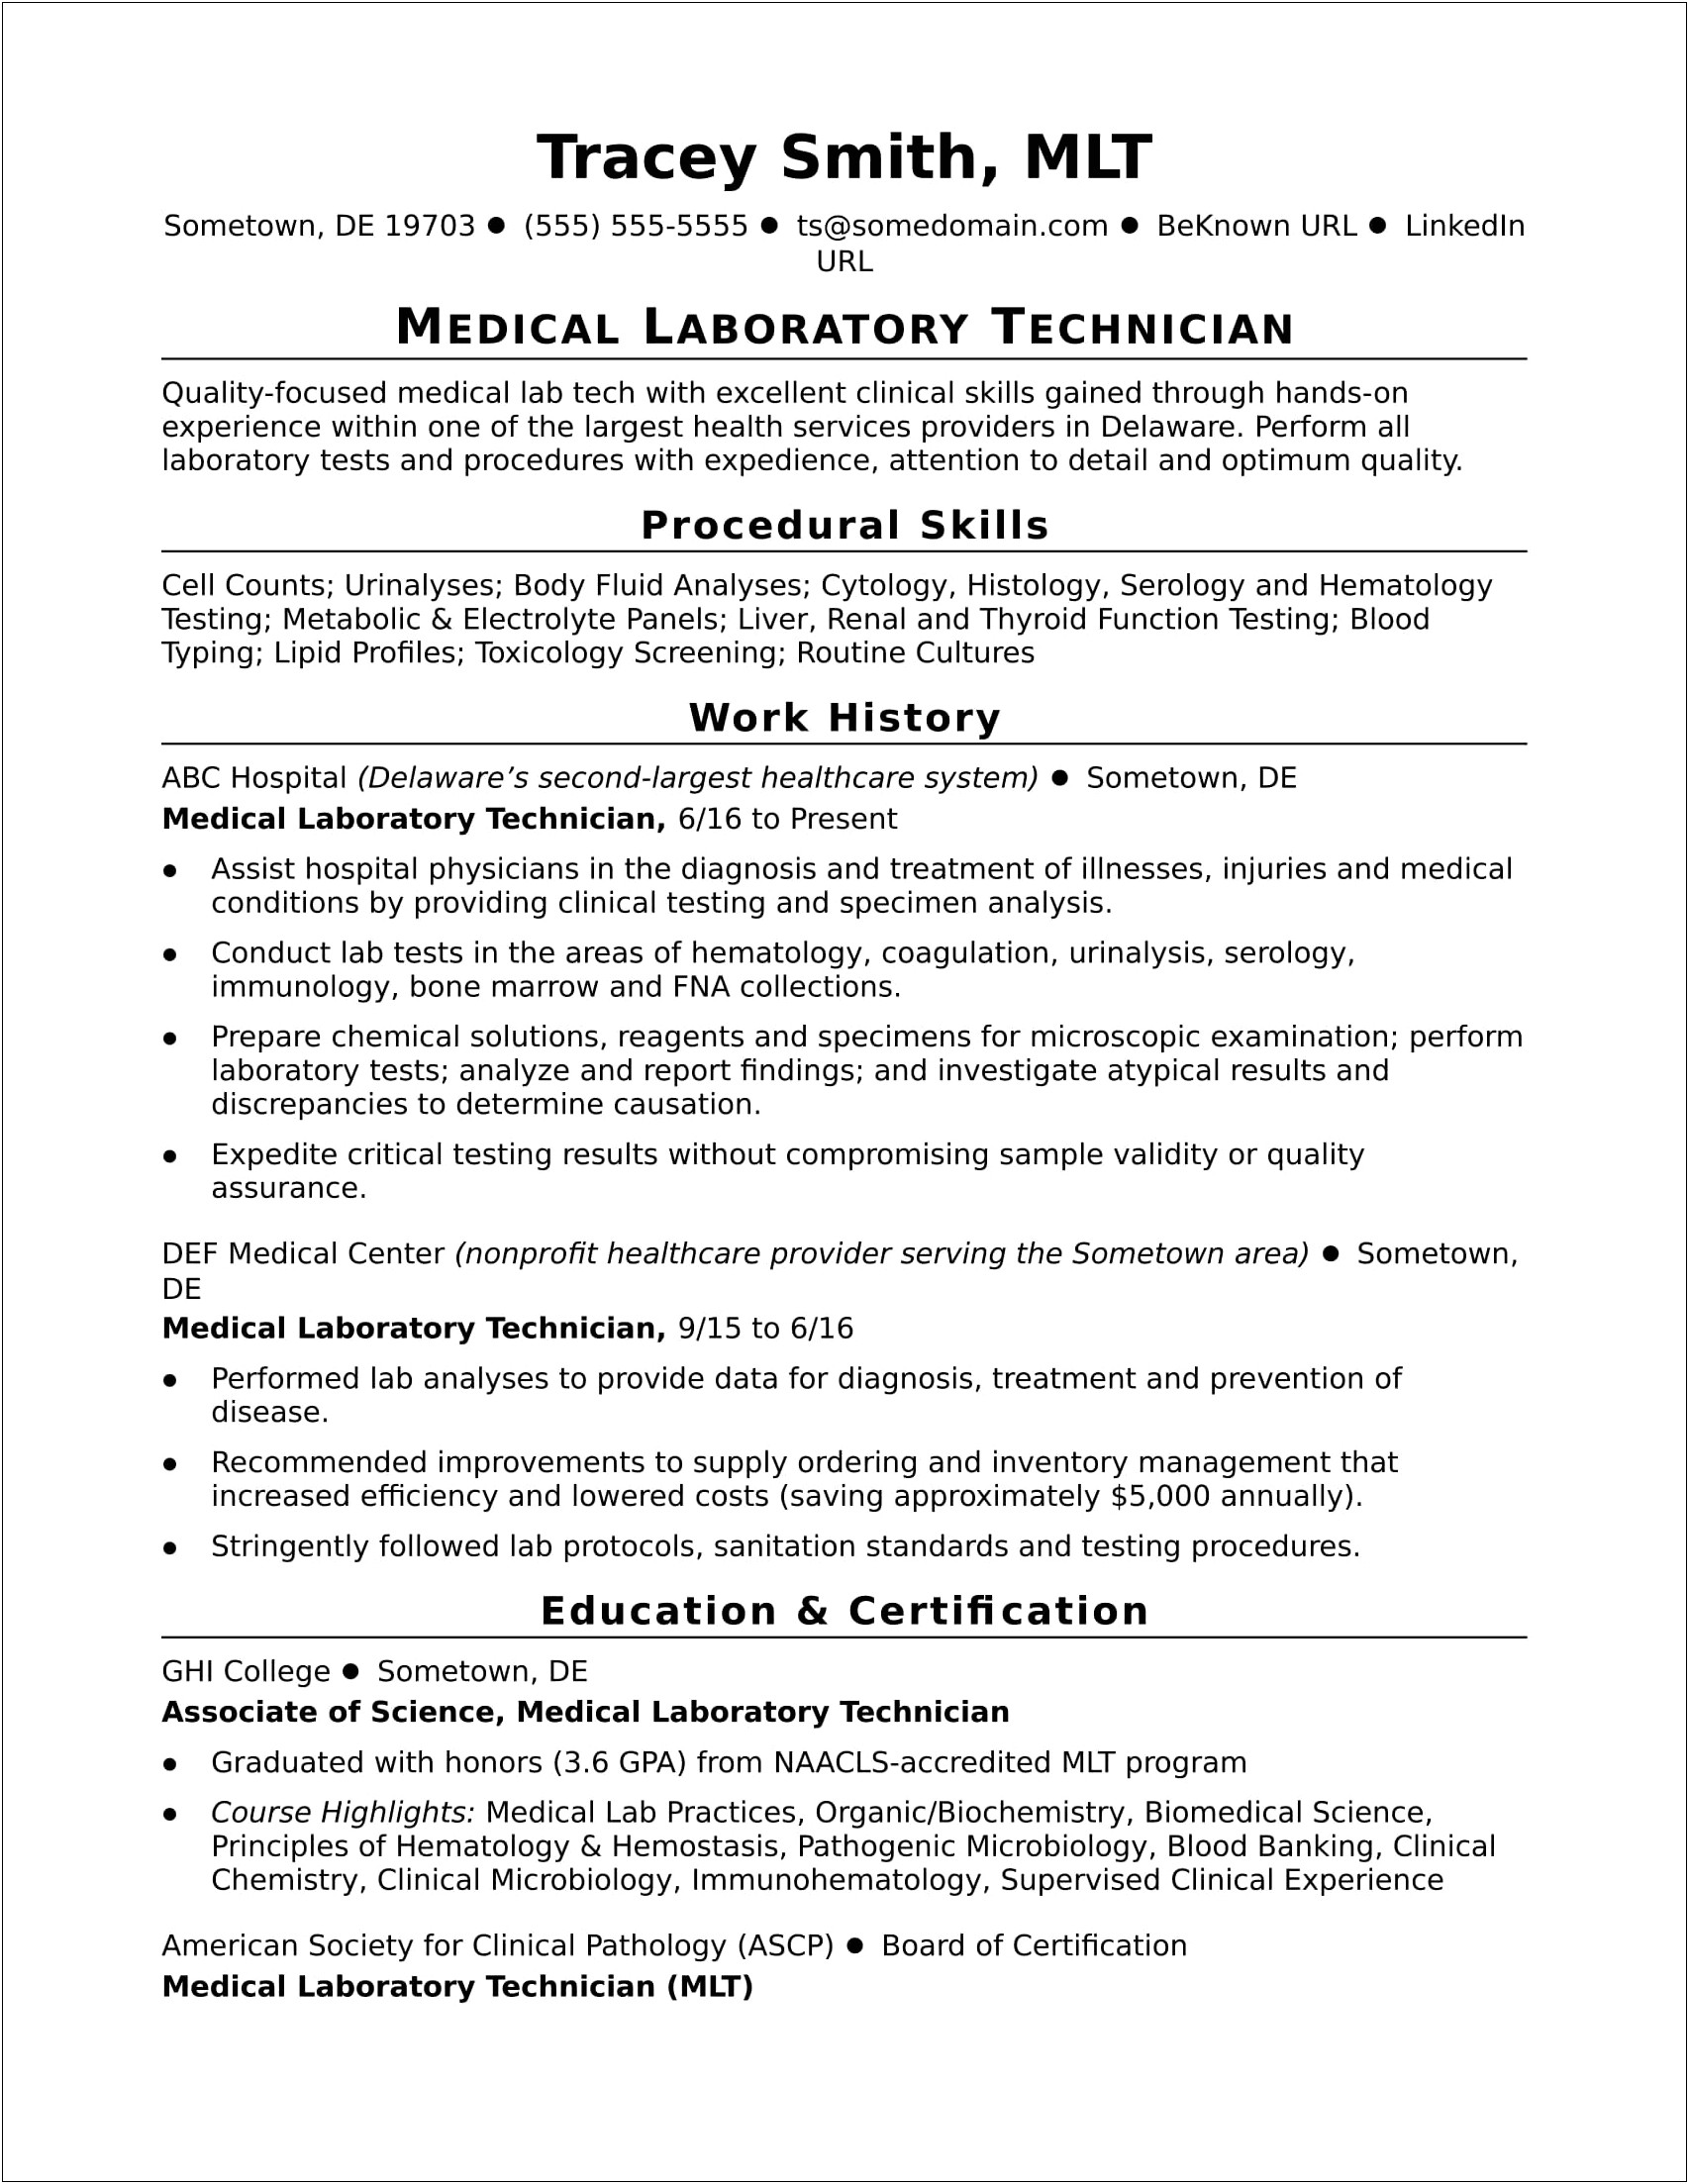 Resume Description For Organic Chemistry Lab Assistant